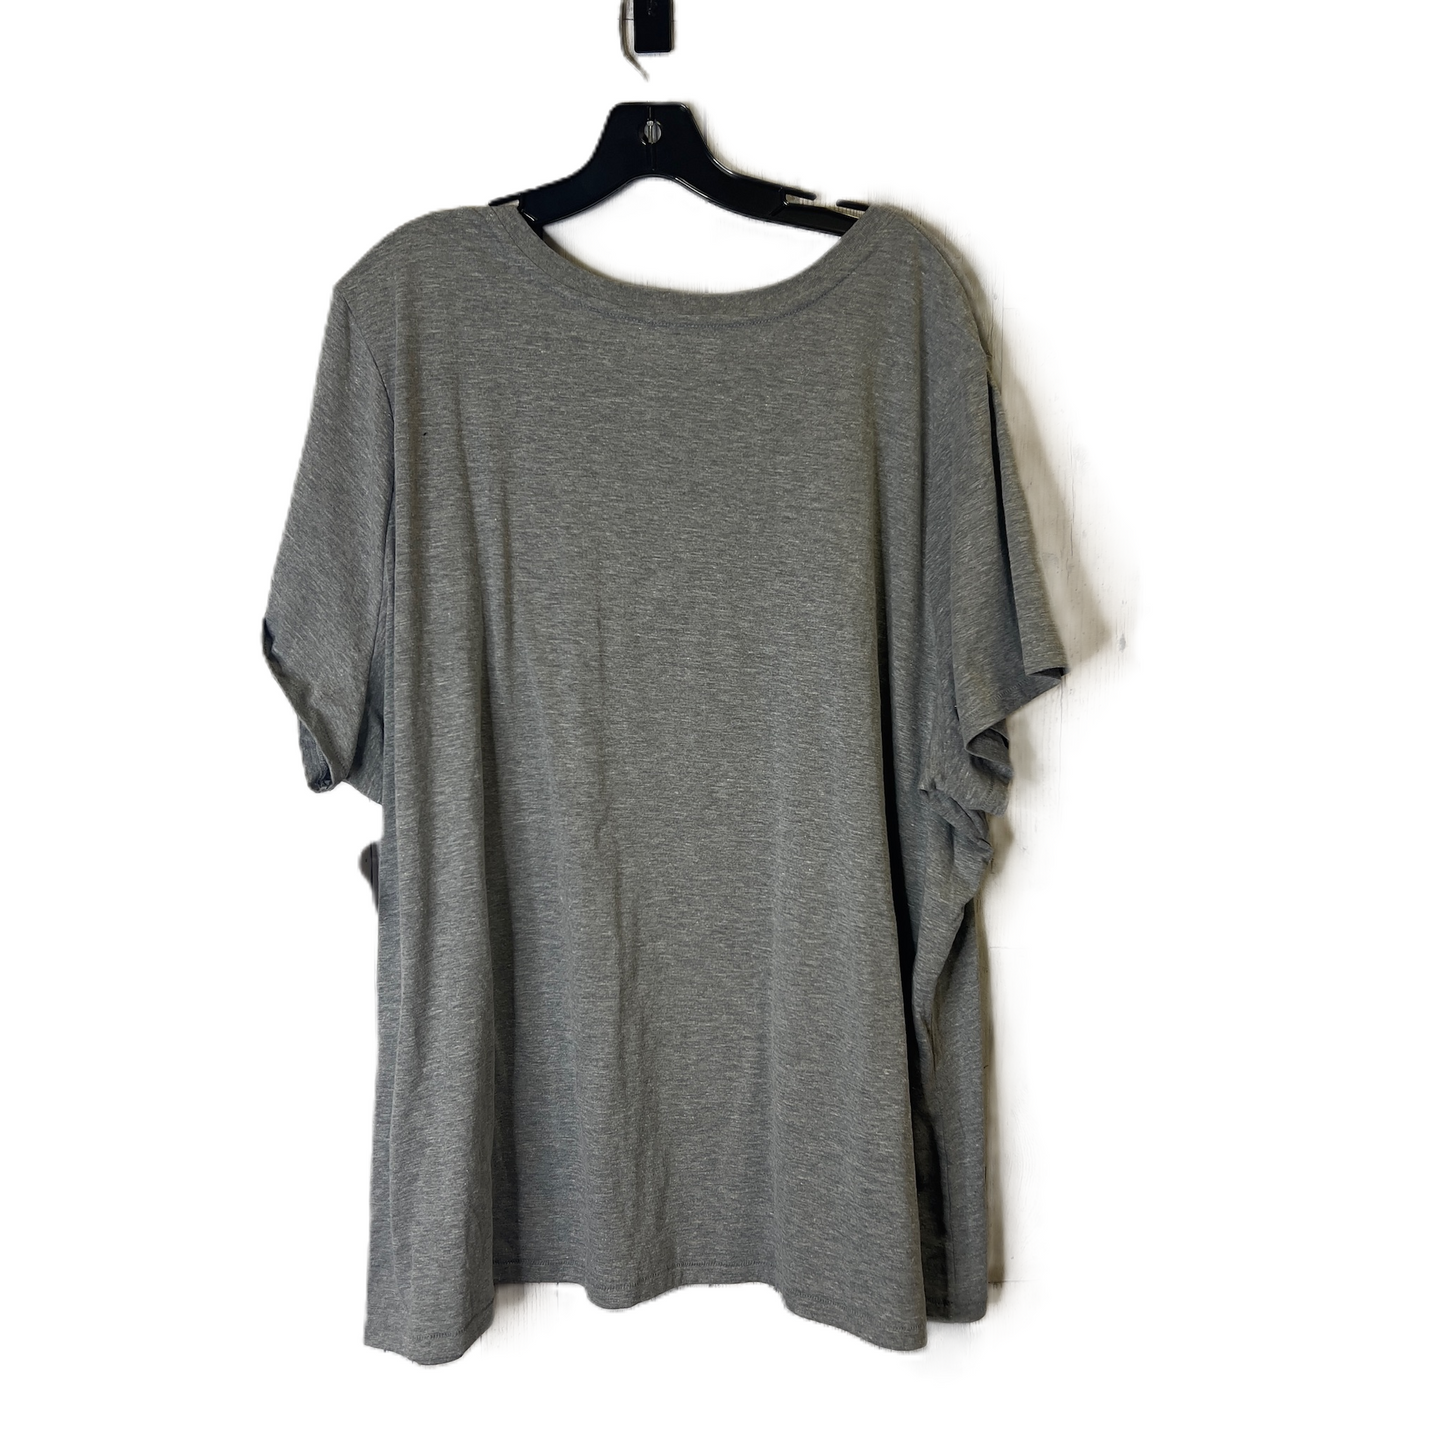 Grey Top Short Sleeve Basic By Lane Bryant, Size: 4x